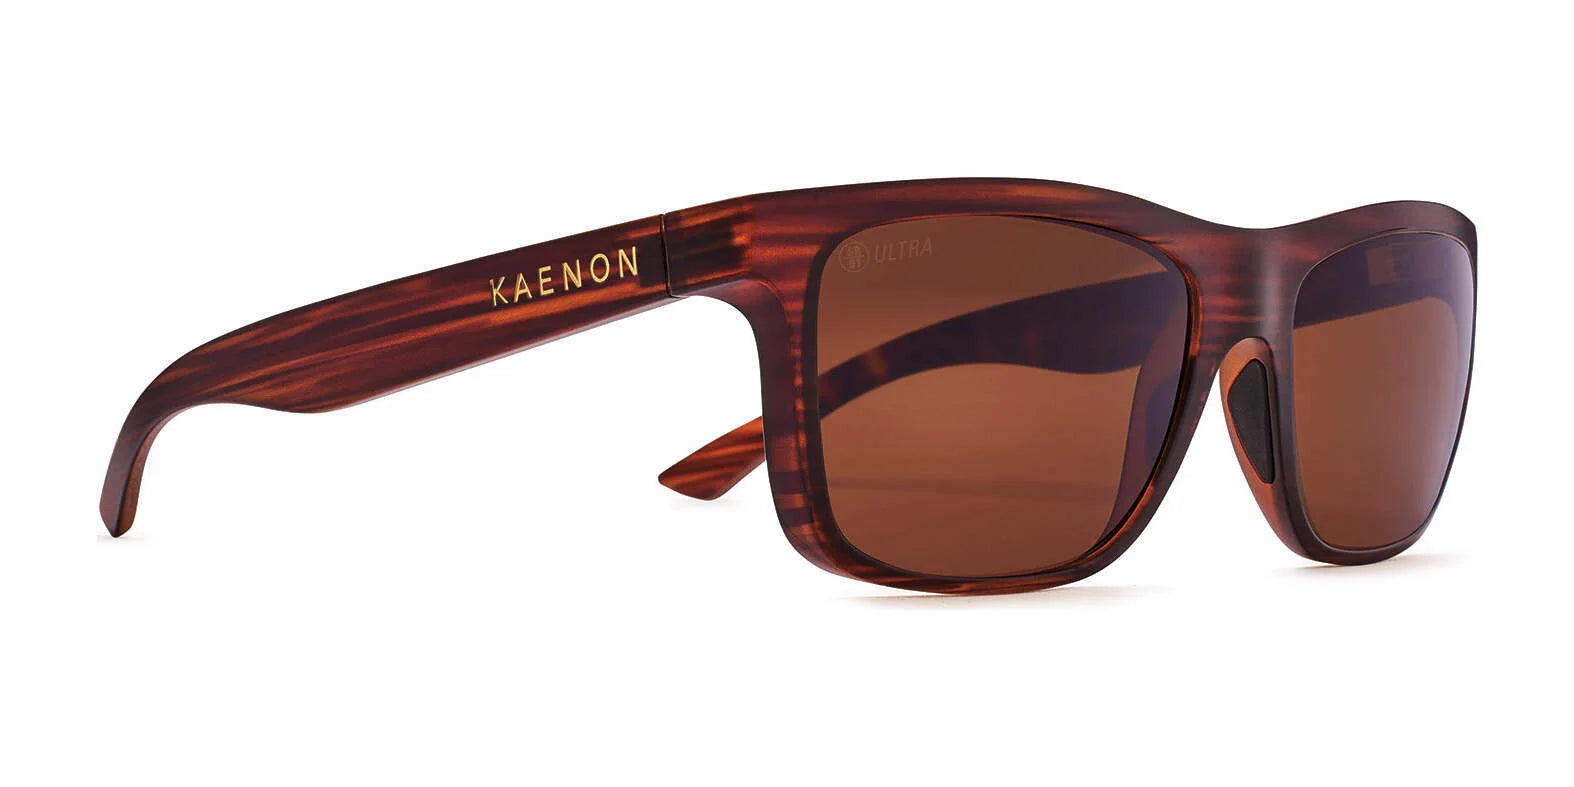 Kaenon CLARKE Sunglasses 175 / Hazelnut